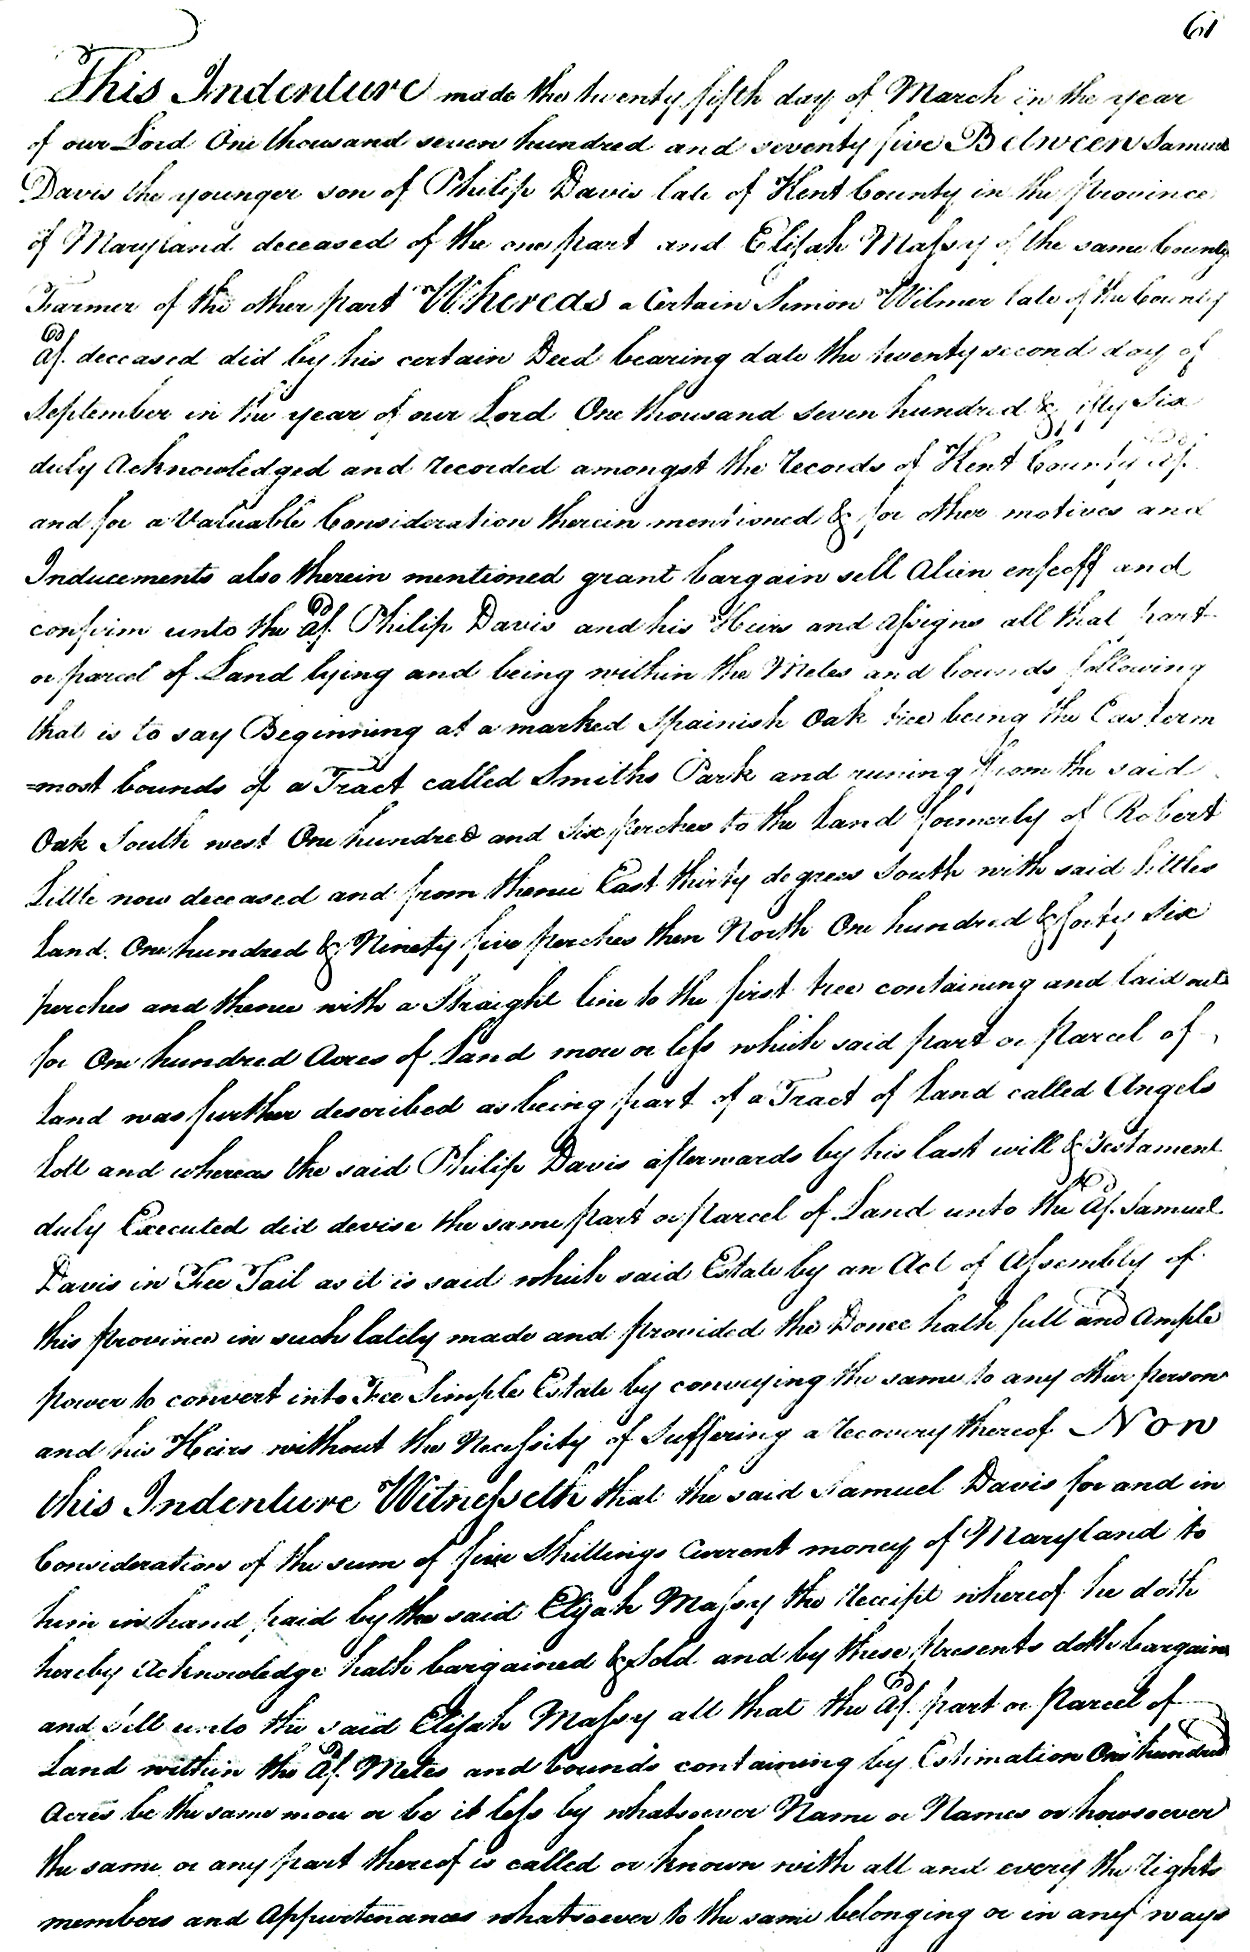 Maryland Land Records, Kent County, Samuel Davis to Elijah Massey, June 9, 1775